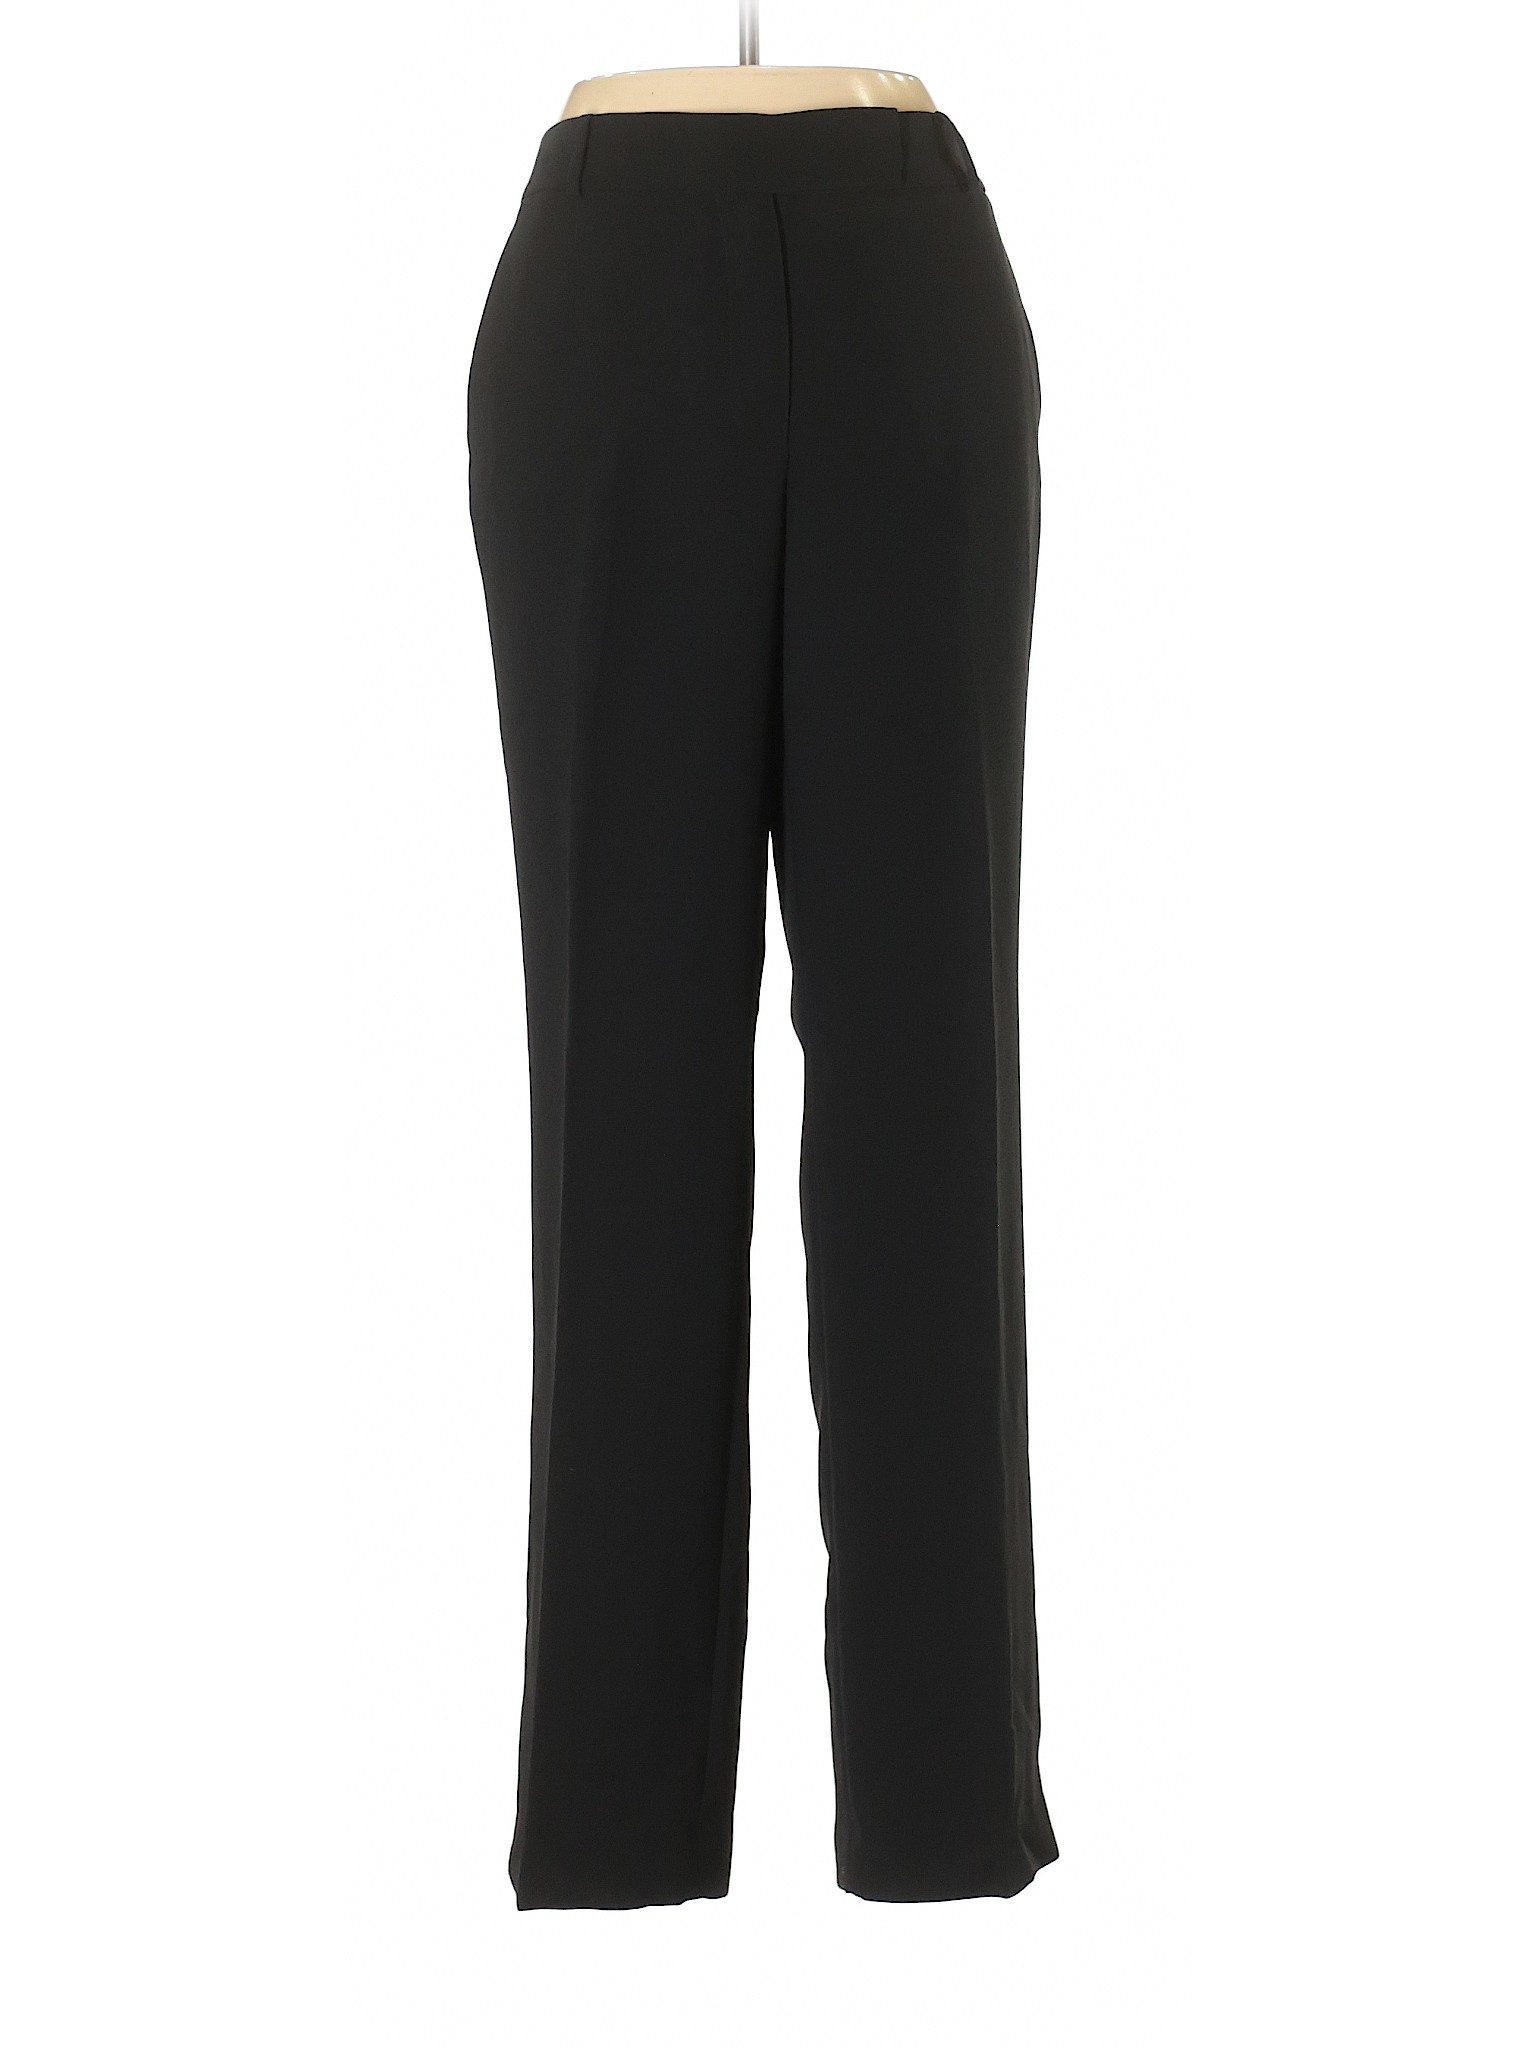 Talbots Women Black Dress Pants 8 | eBay